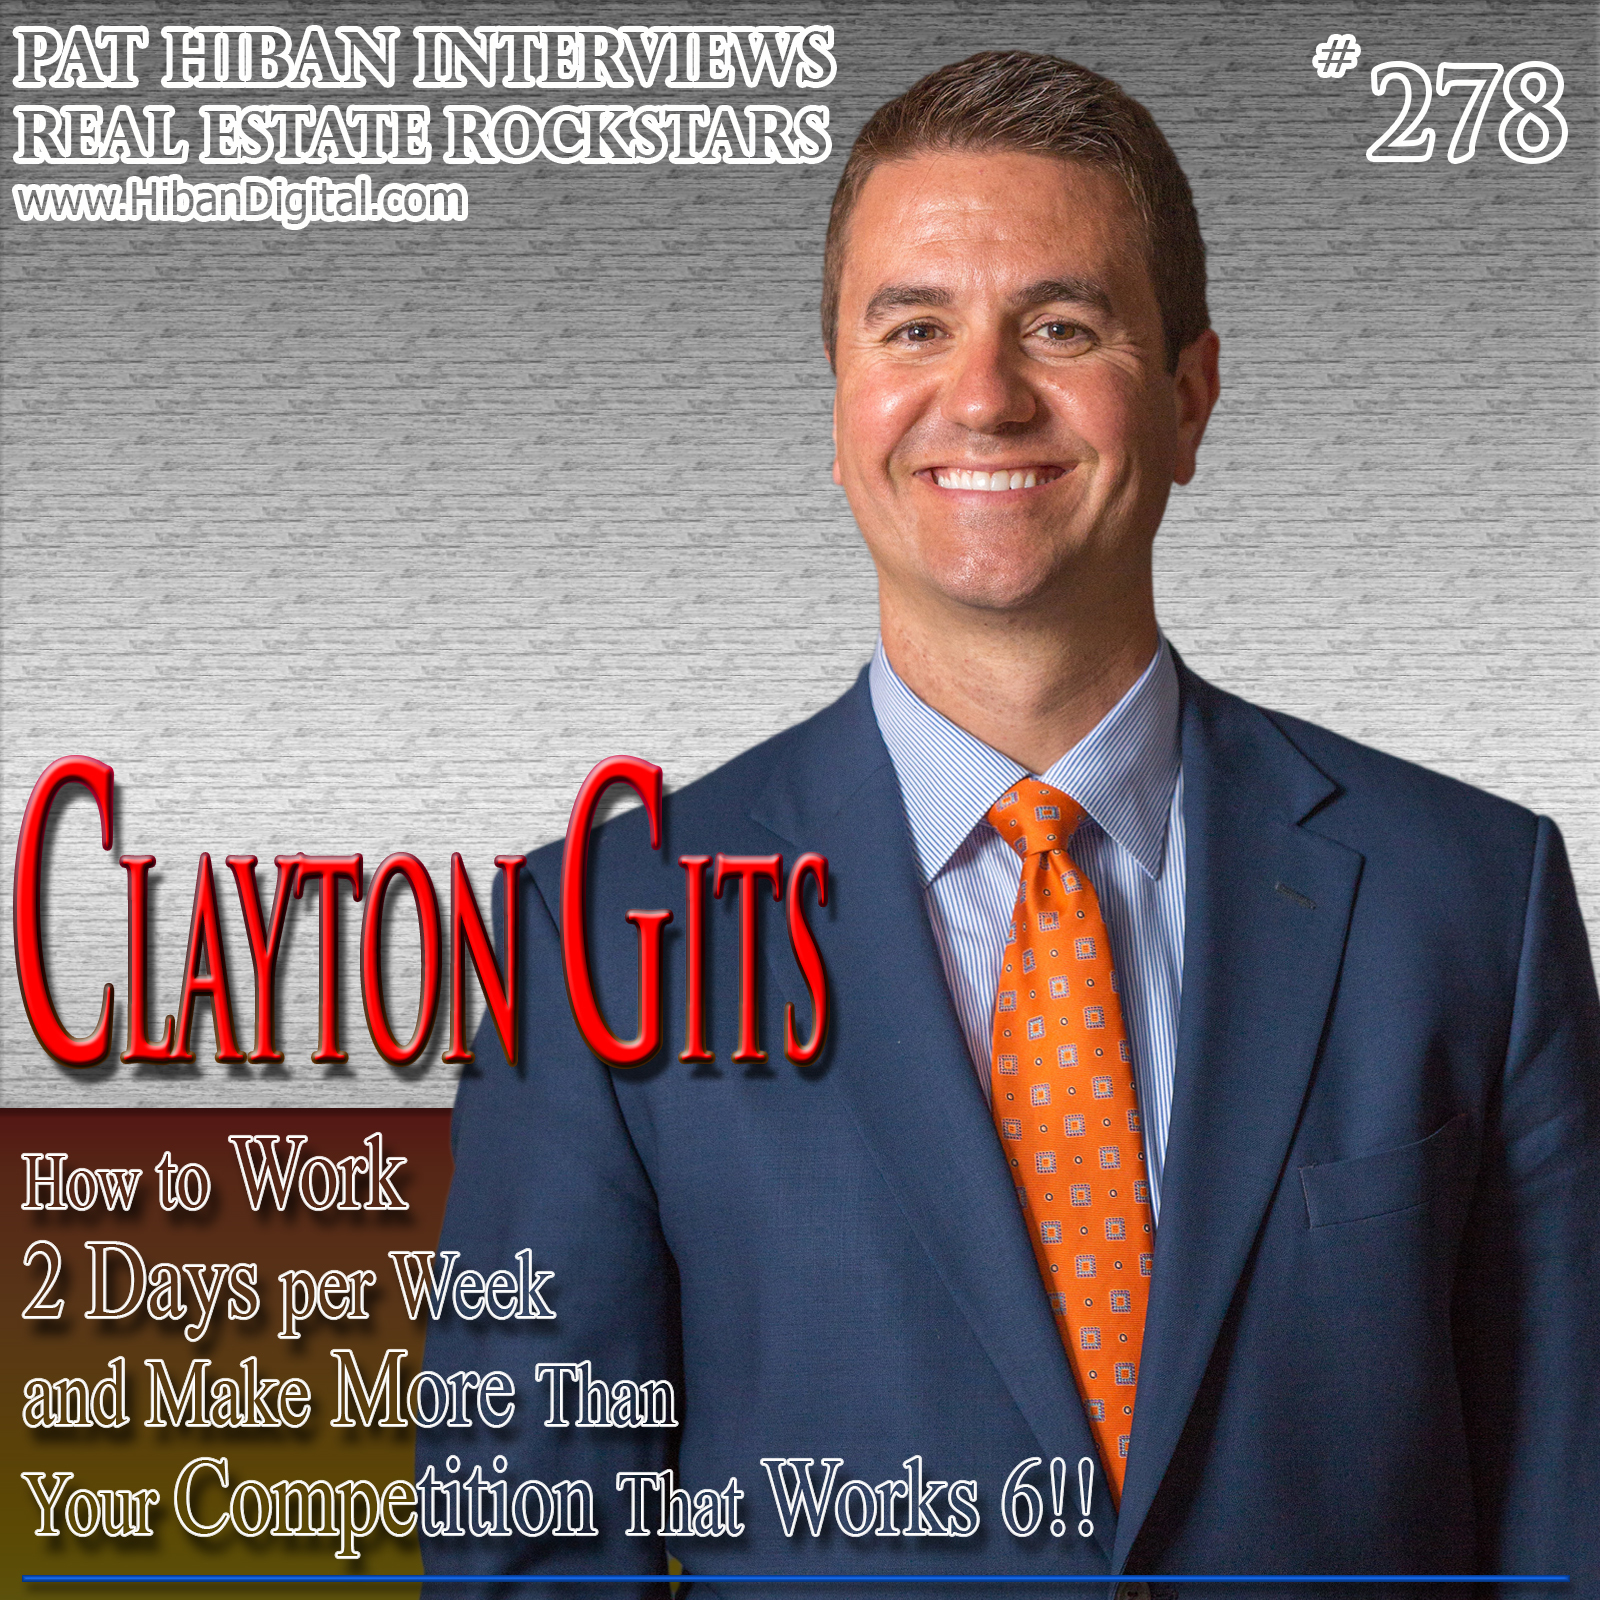 Clayton-Gits